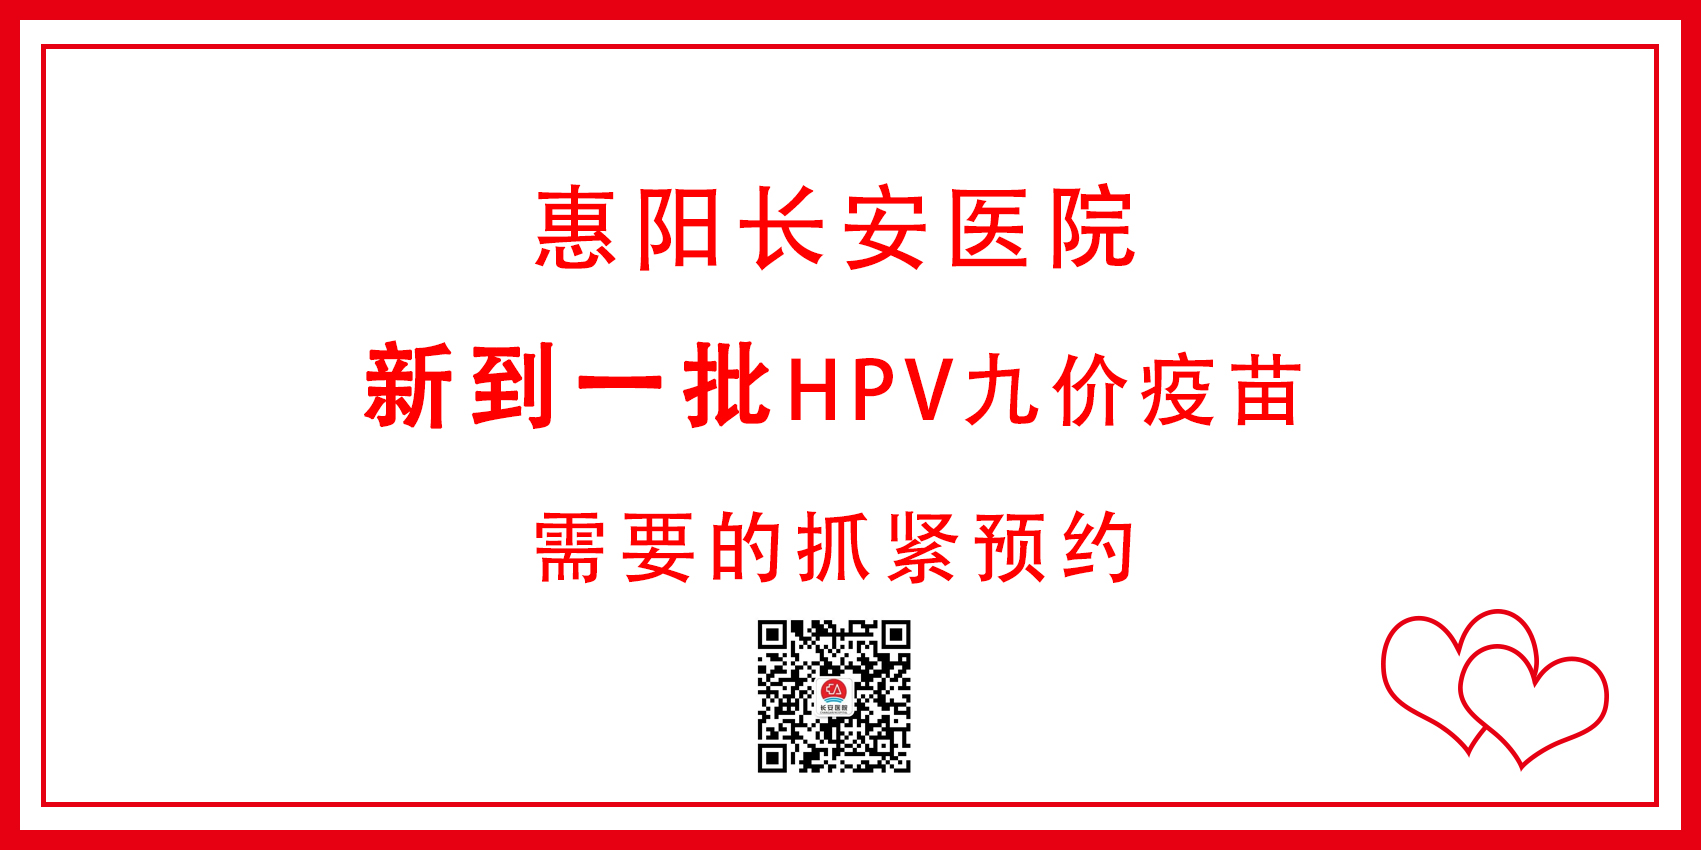 <b>通知 | 惠阳长安医院HPV九价开始预约</b>